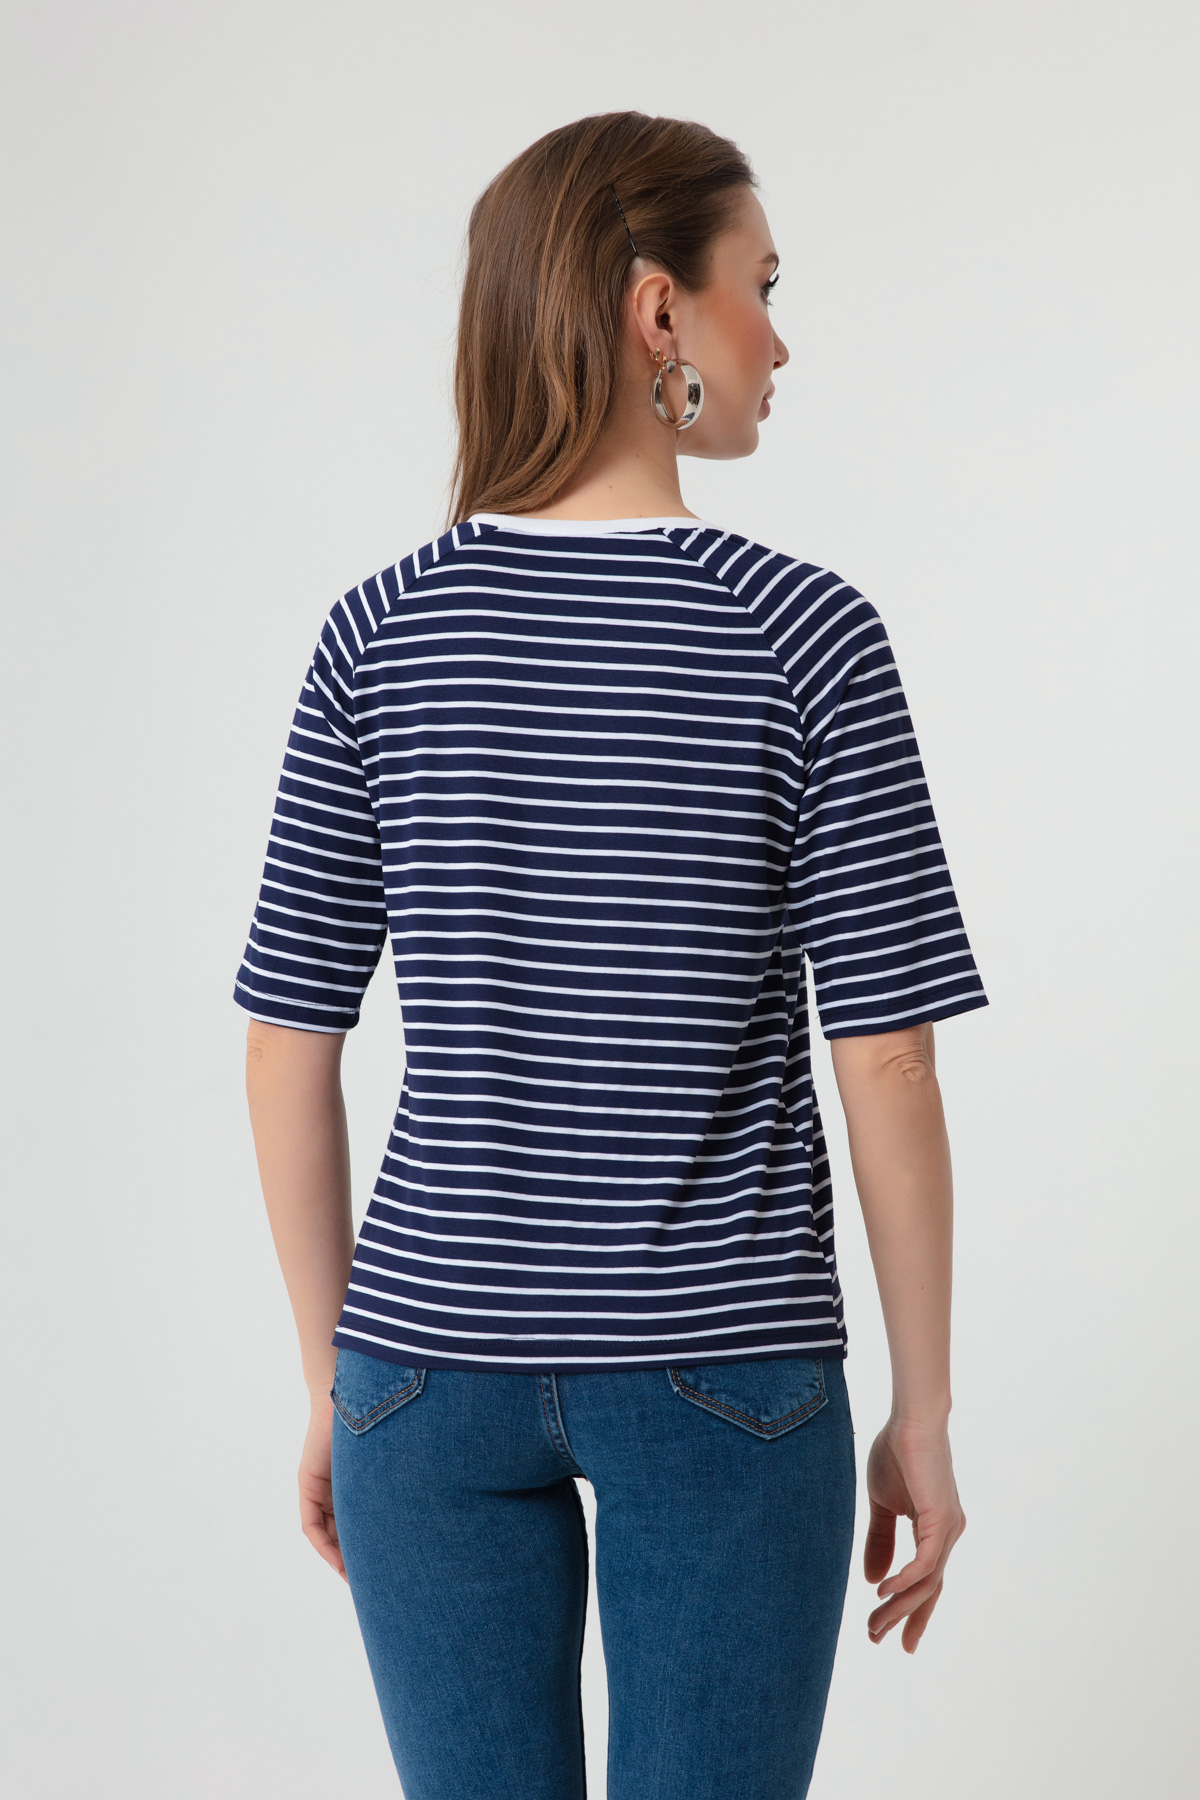 Women's White Striped T-Shirt